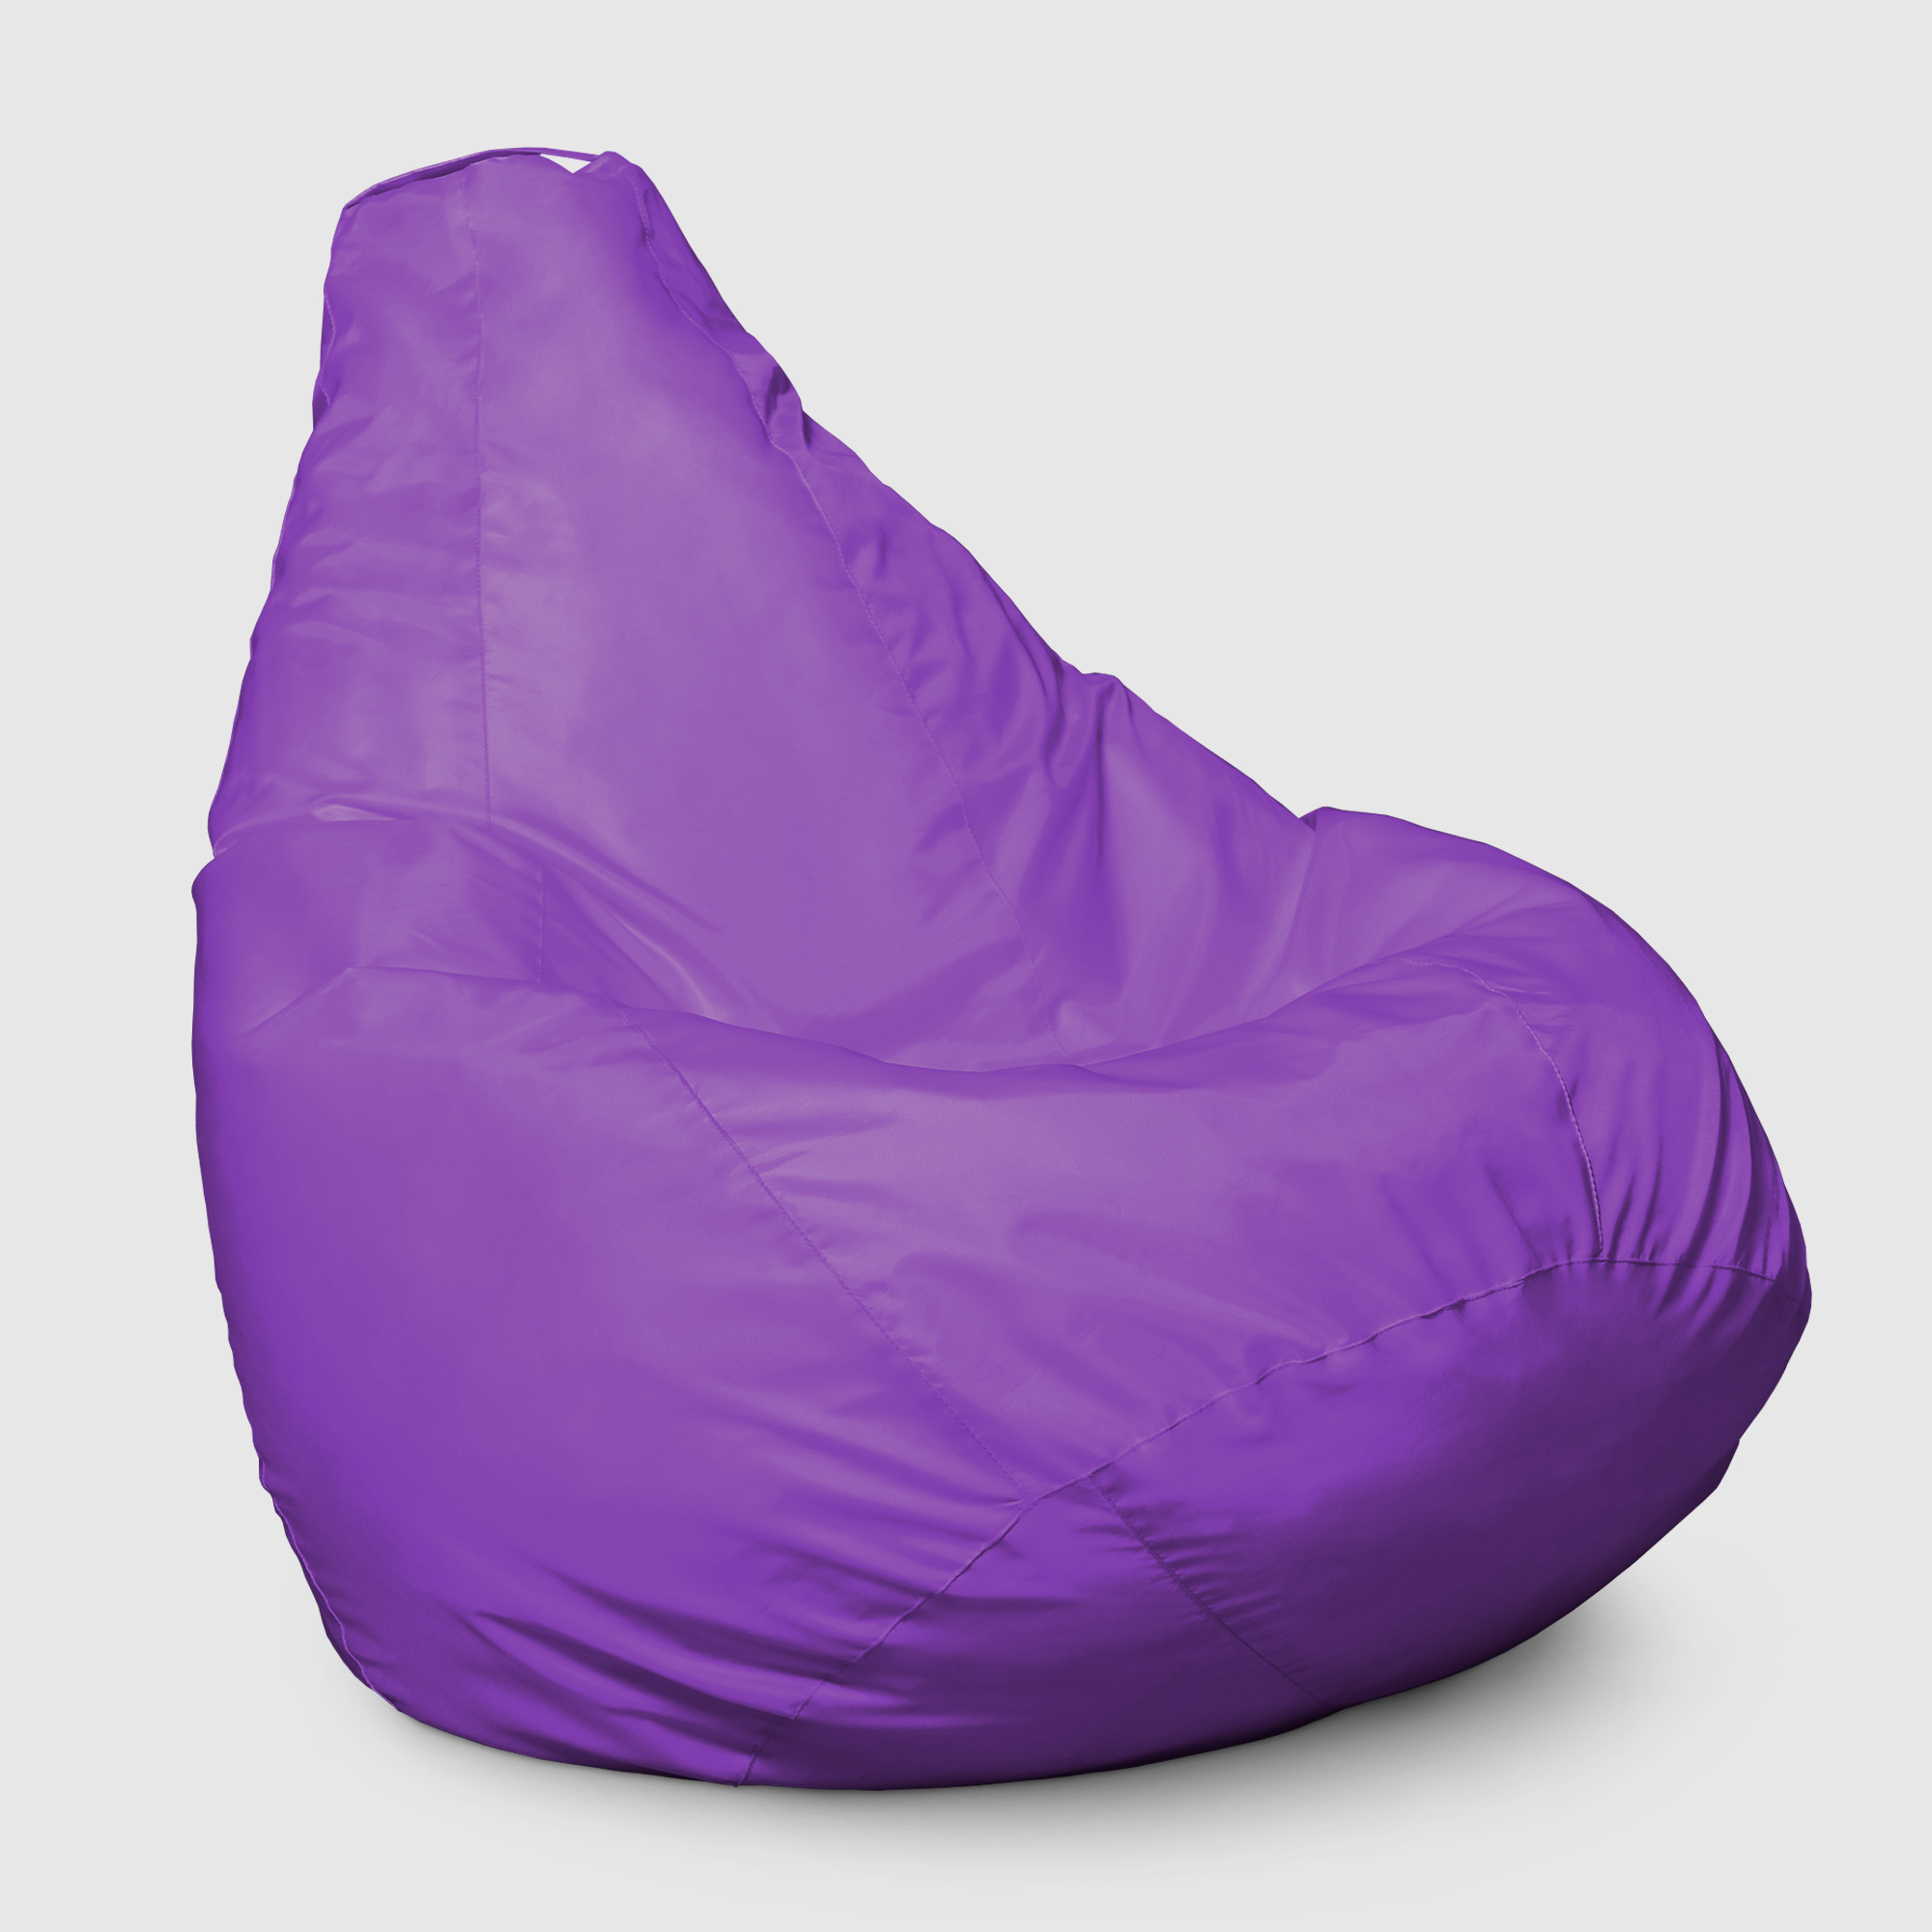 Кресло мешок Dreambag Меган xl фиолетовое 85х85х125 см кресло мешок dreambag sweet xl